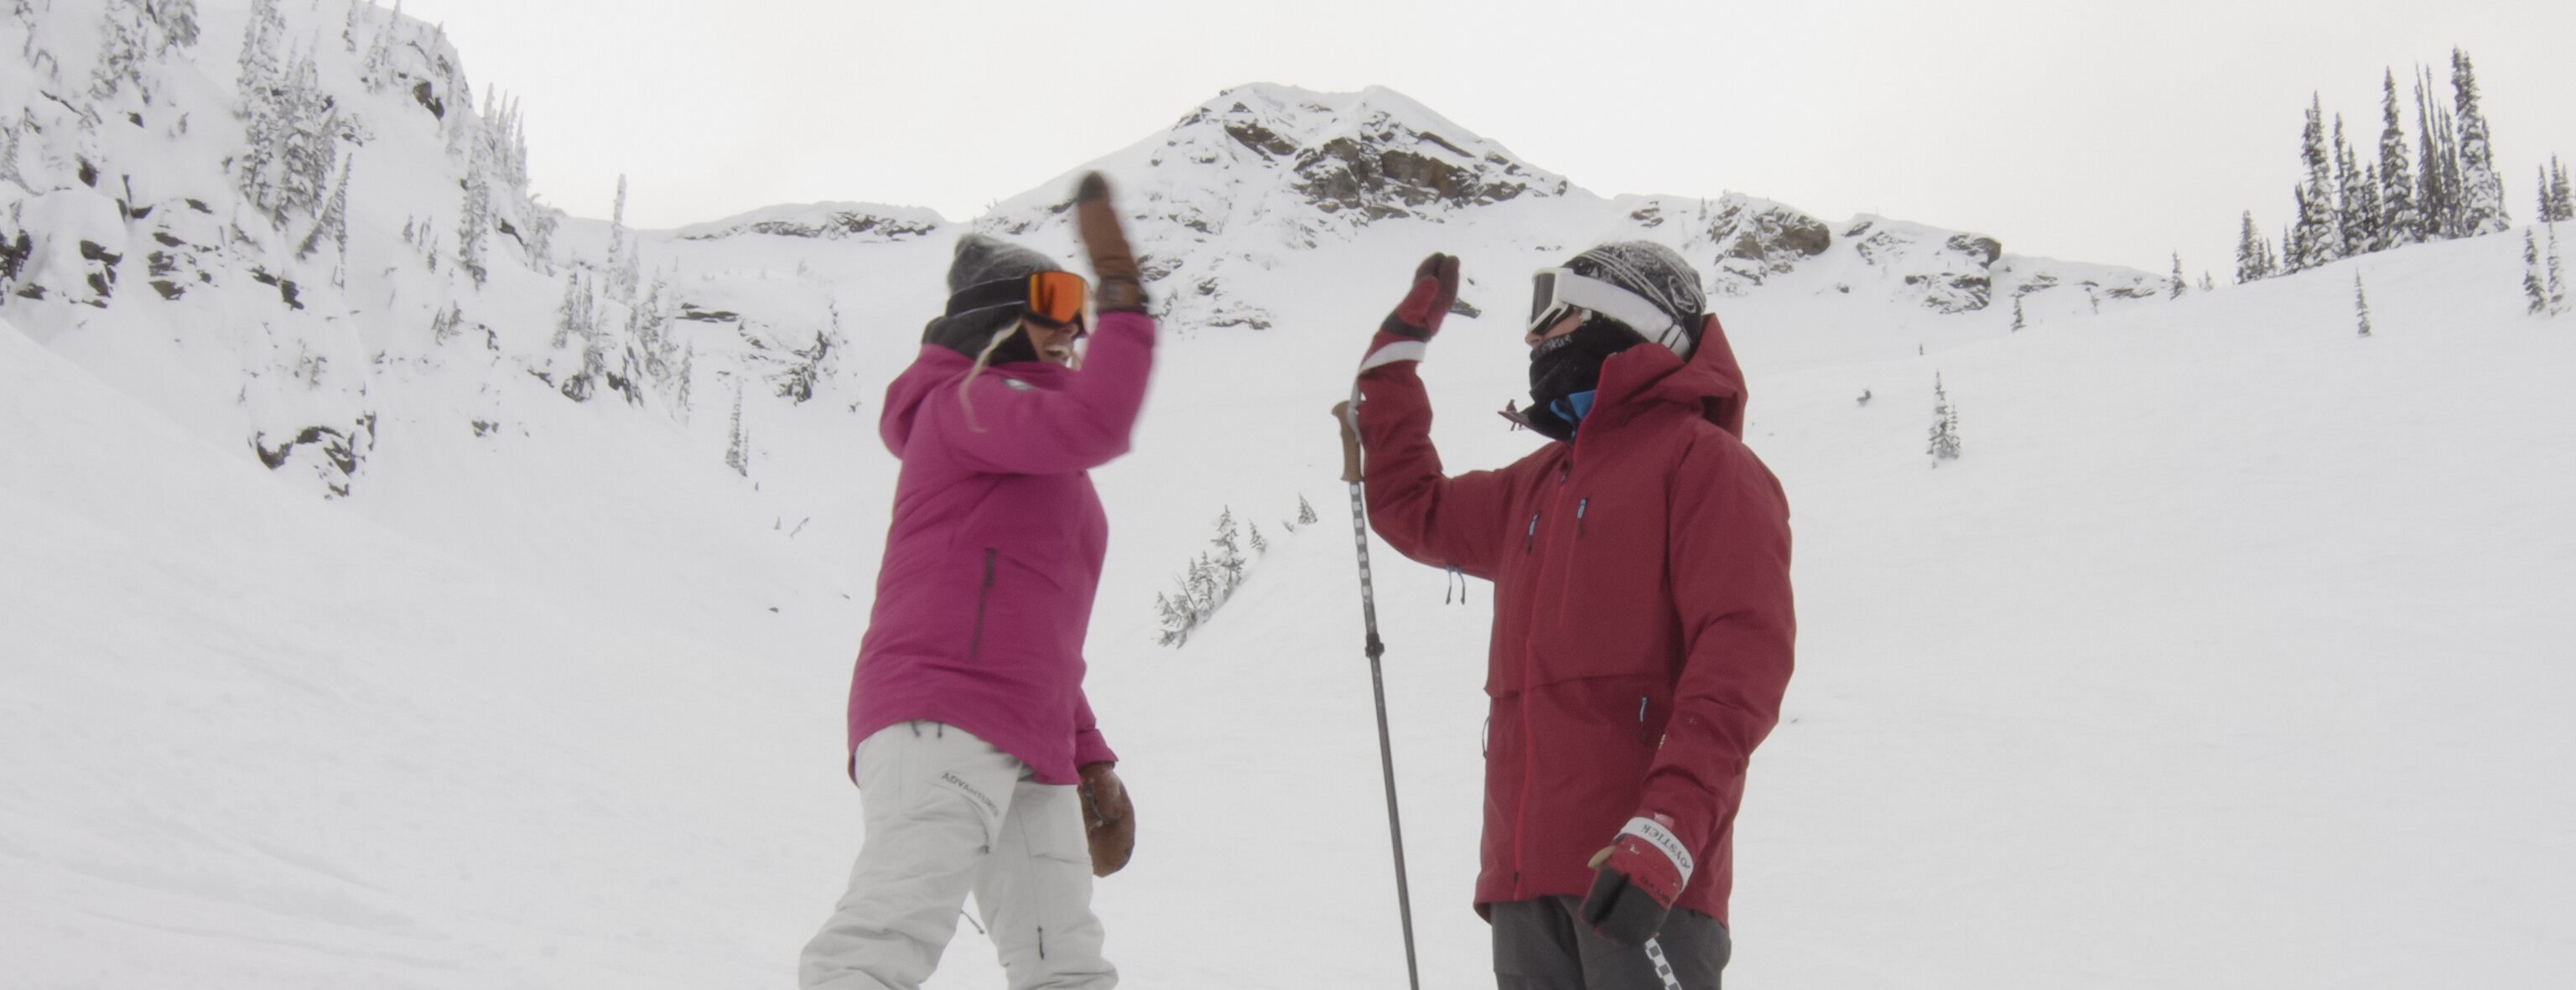 two people high fiving on snowy mountain wearing winter gear